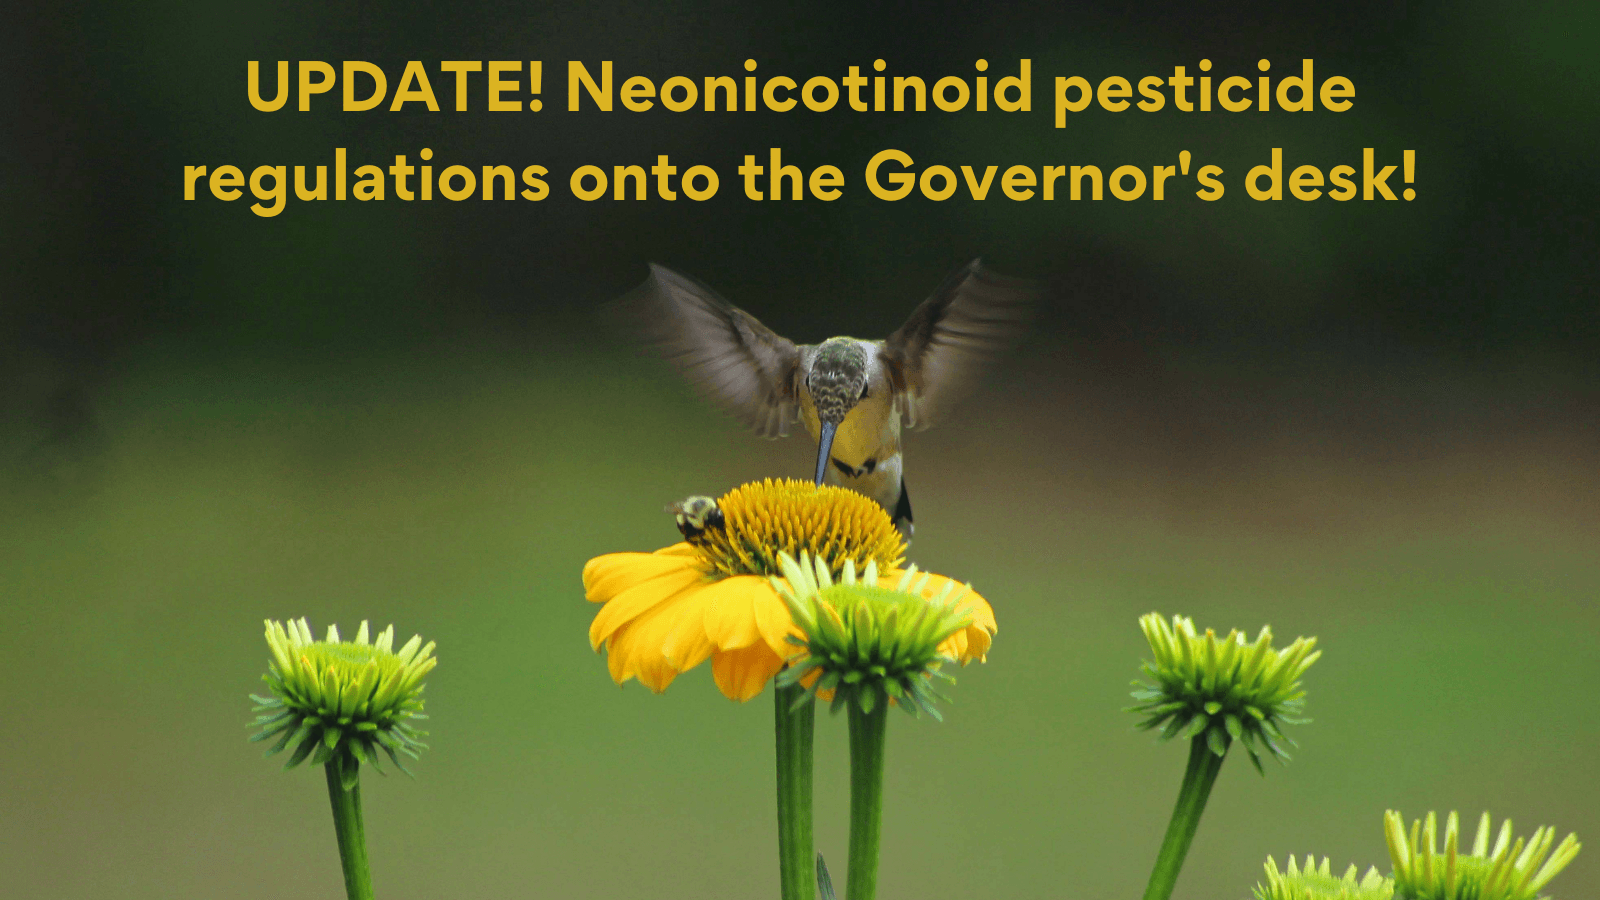 UPDATE! Neonicotinoid pesticide regulations onto the Governor's desk!